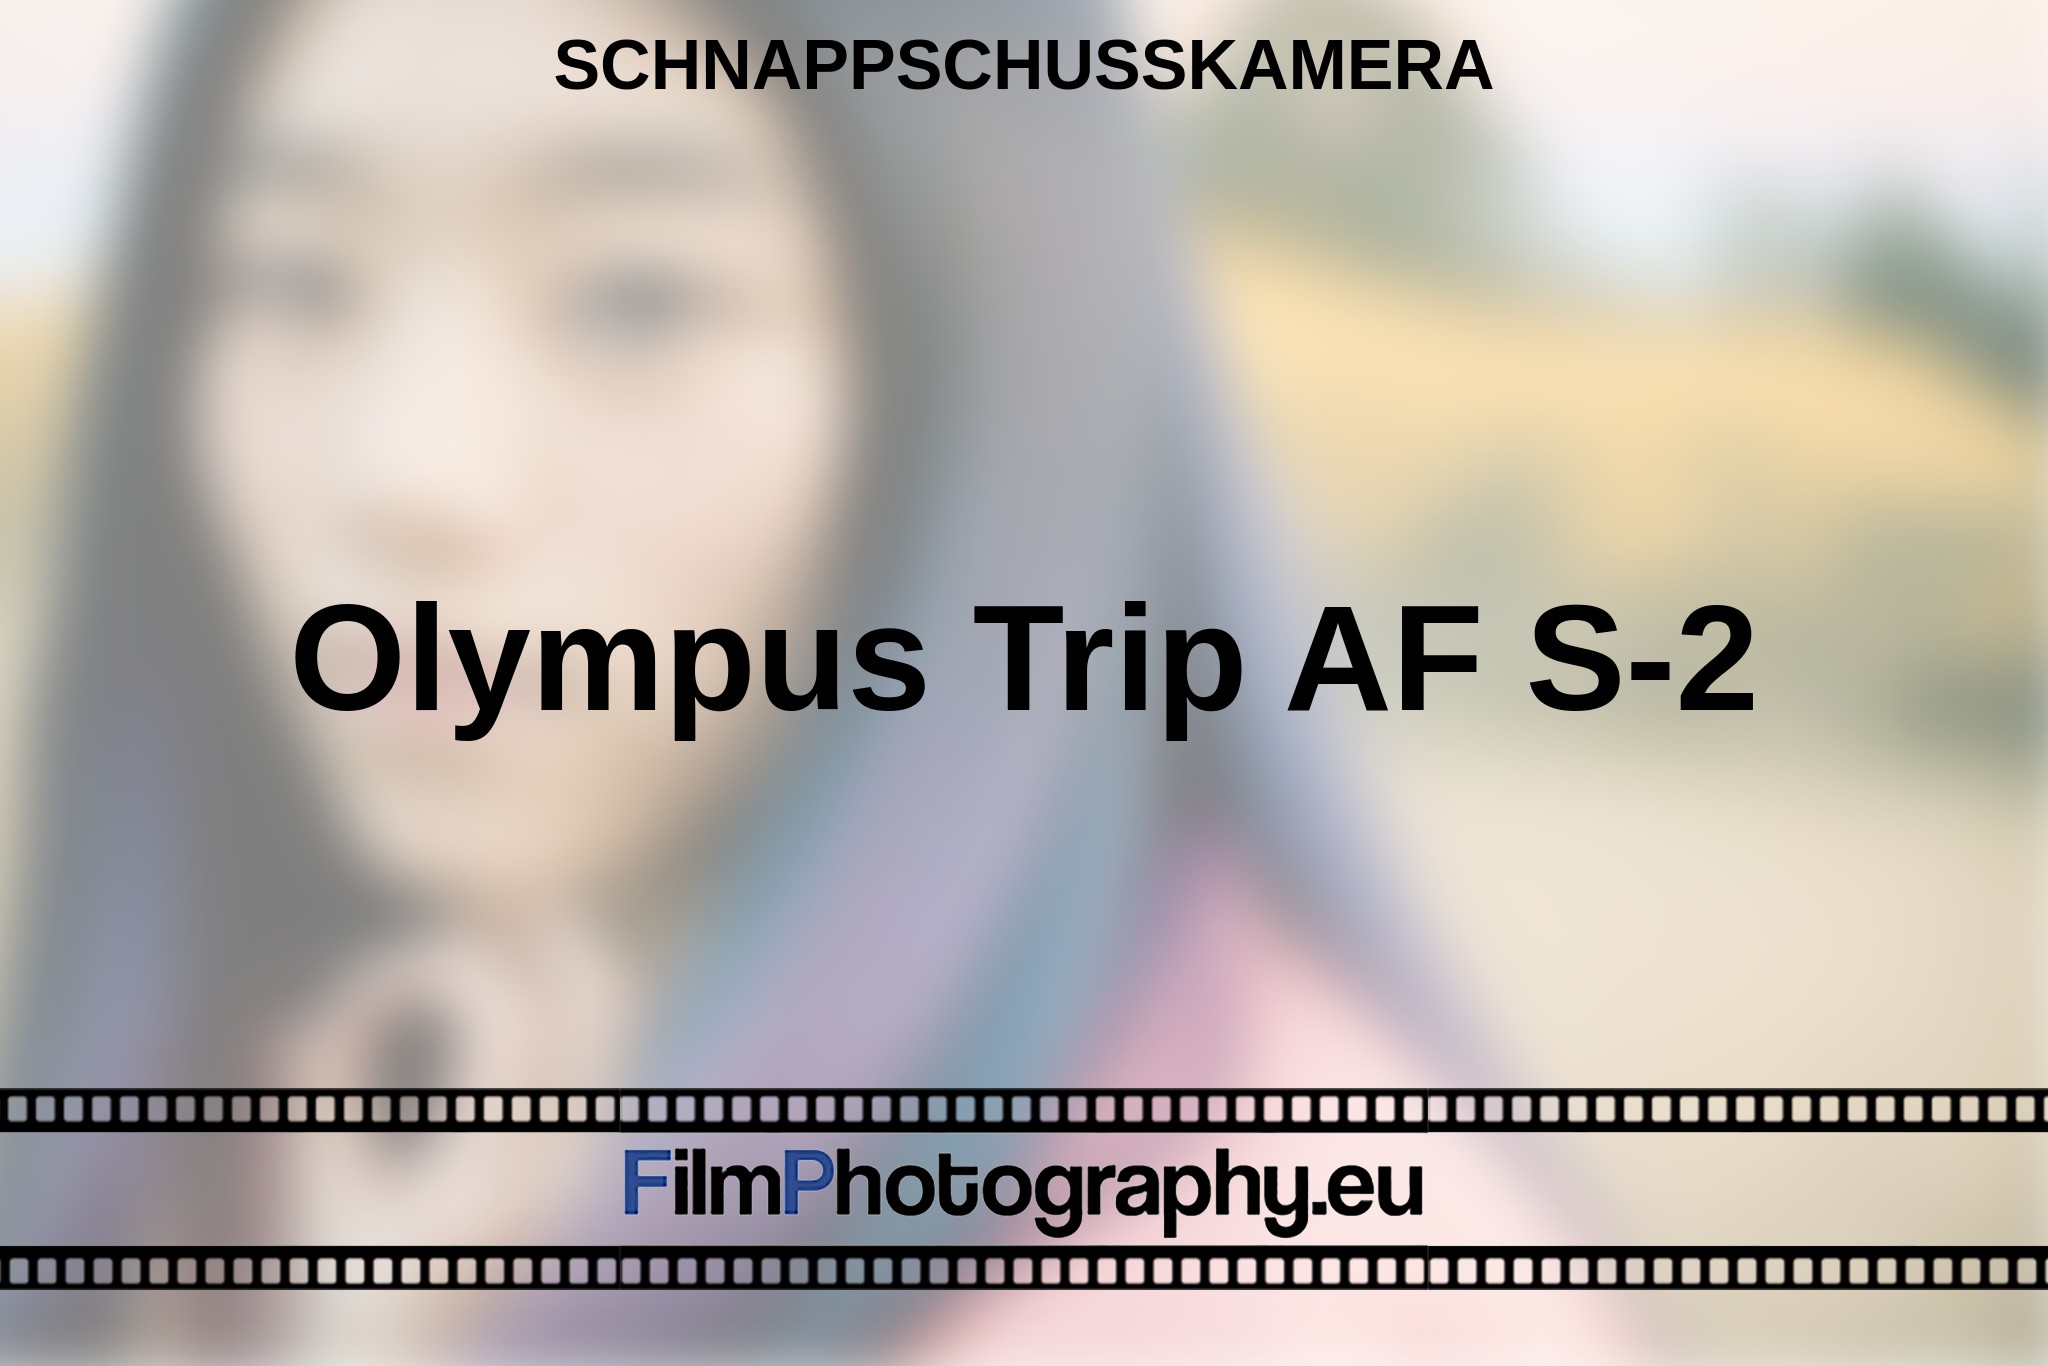 olympus-trip-af-s-2-schnappschusskamera-bnv.jpg